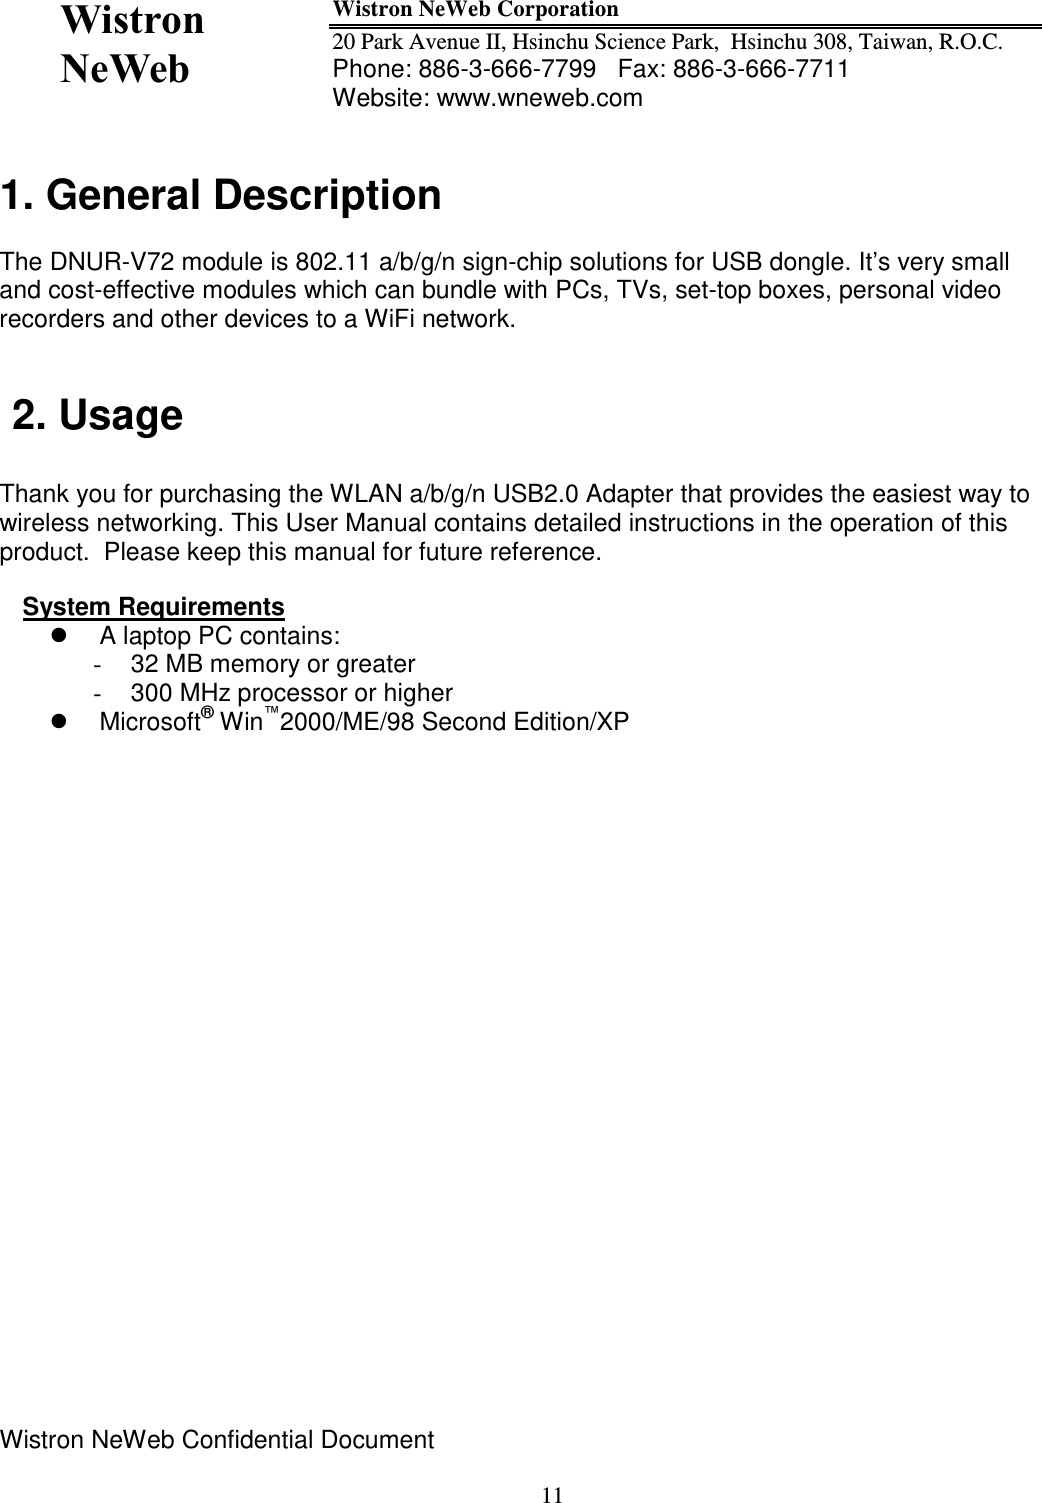 wistron neweb 802.11 a/b/g/n 2x2 usb dongle driver